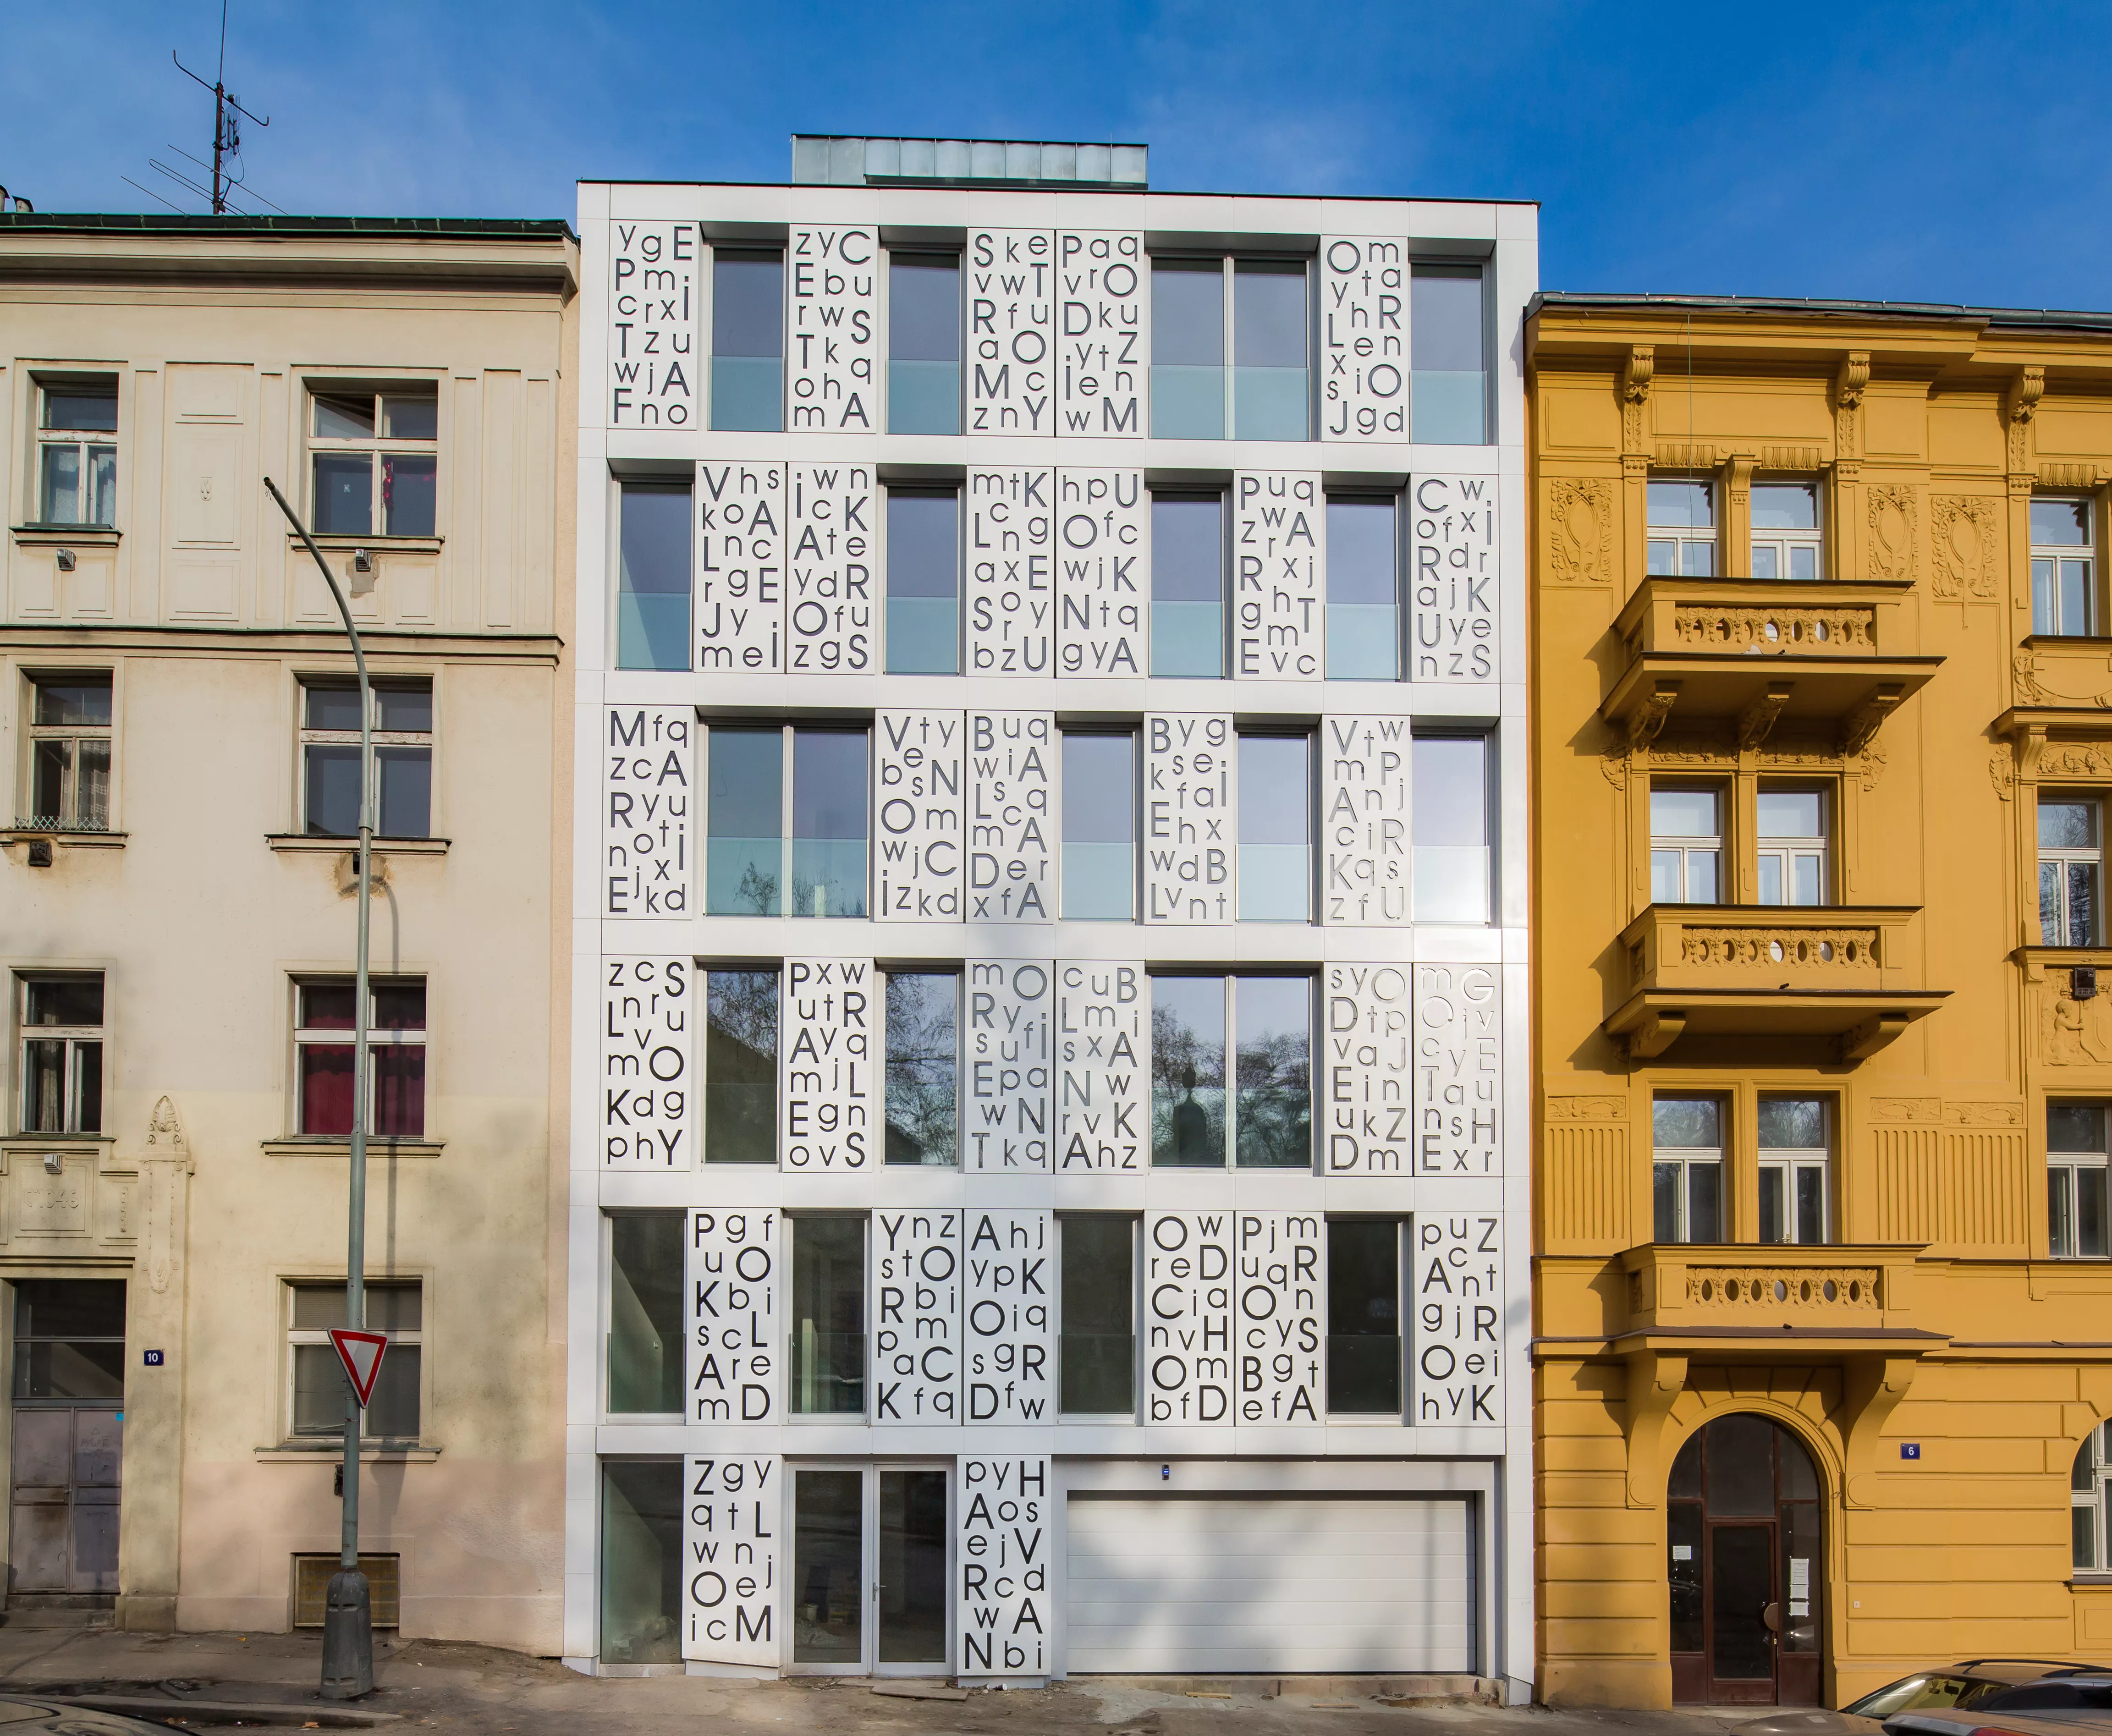 HIMACS ilumina la poética fachada Bieblova en Praga